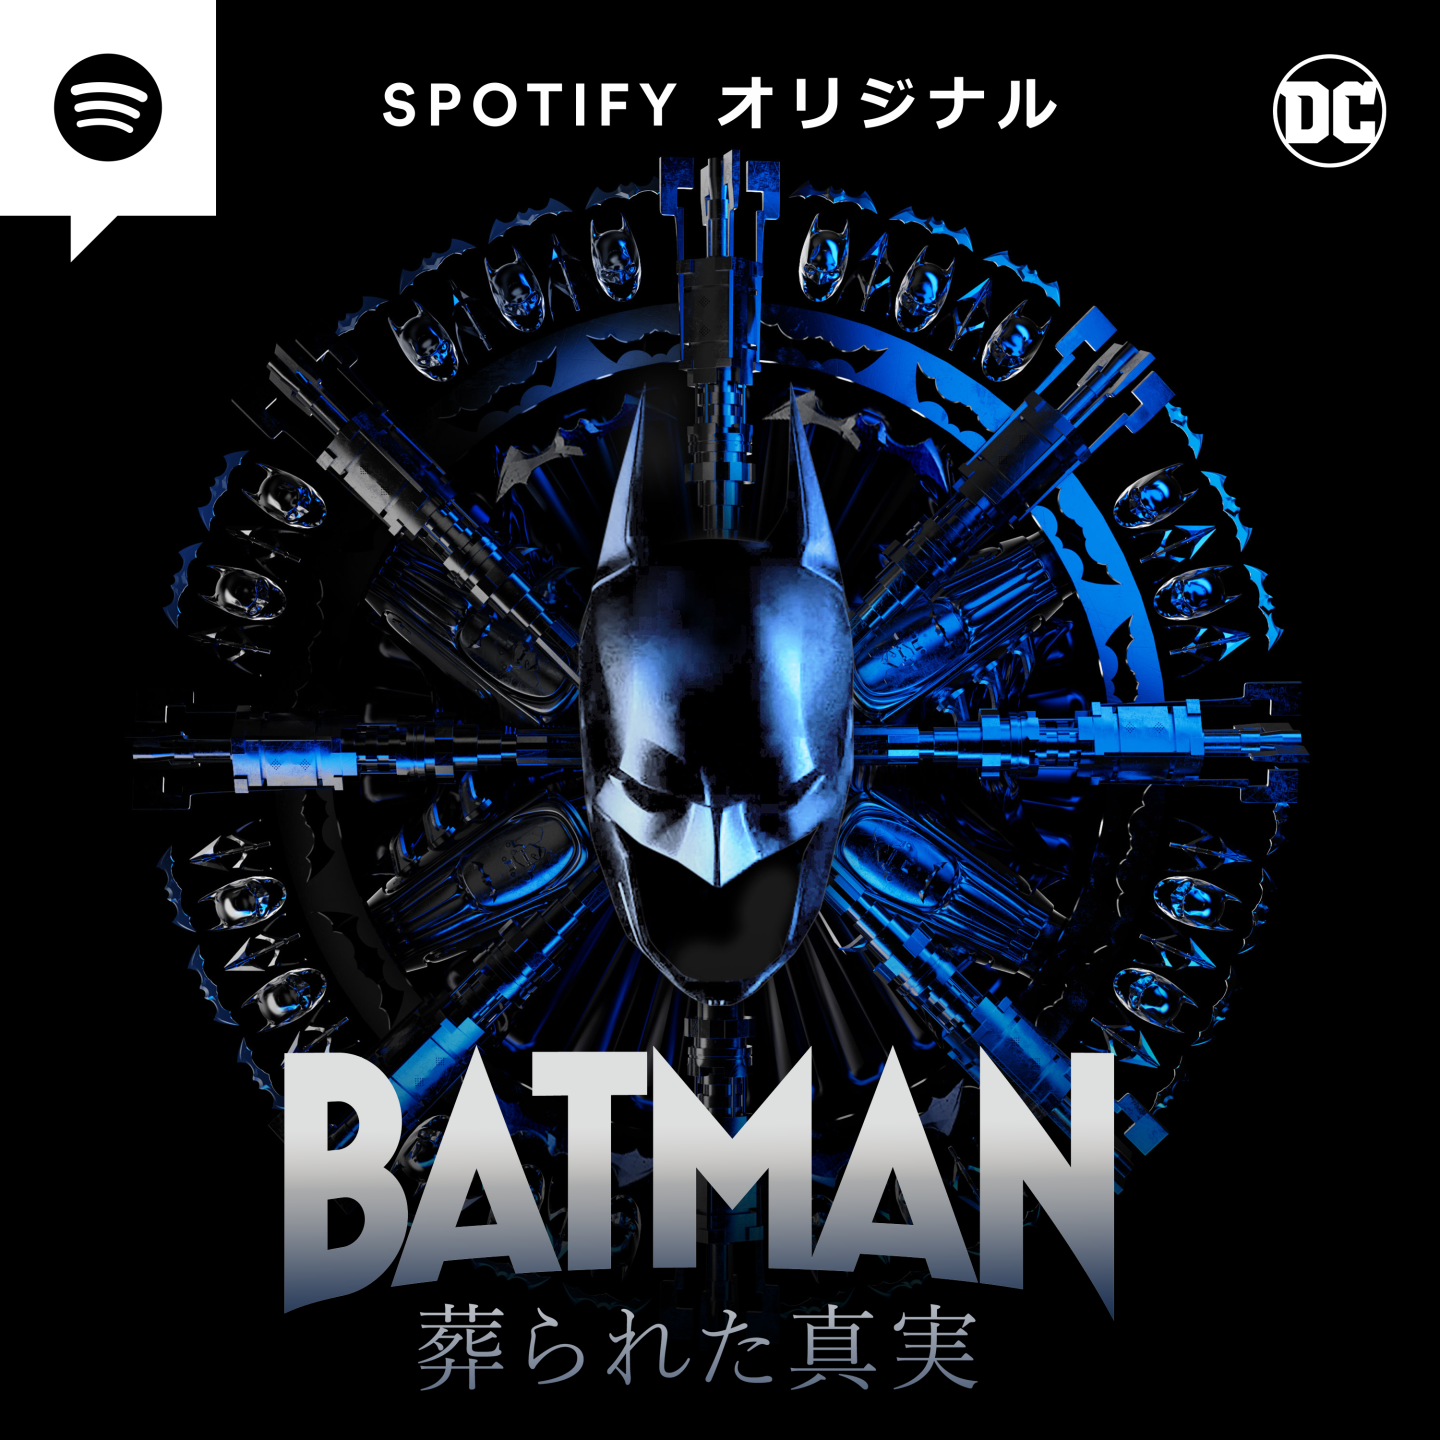 Spotifyで聴くバットマン『BATMAN 葬られた真実』本格サイコスリラー！5月3日より独占配信